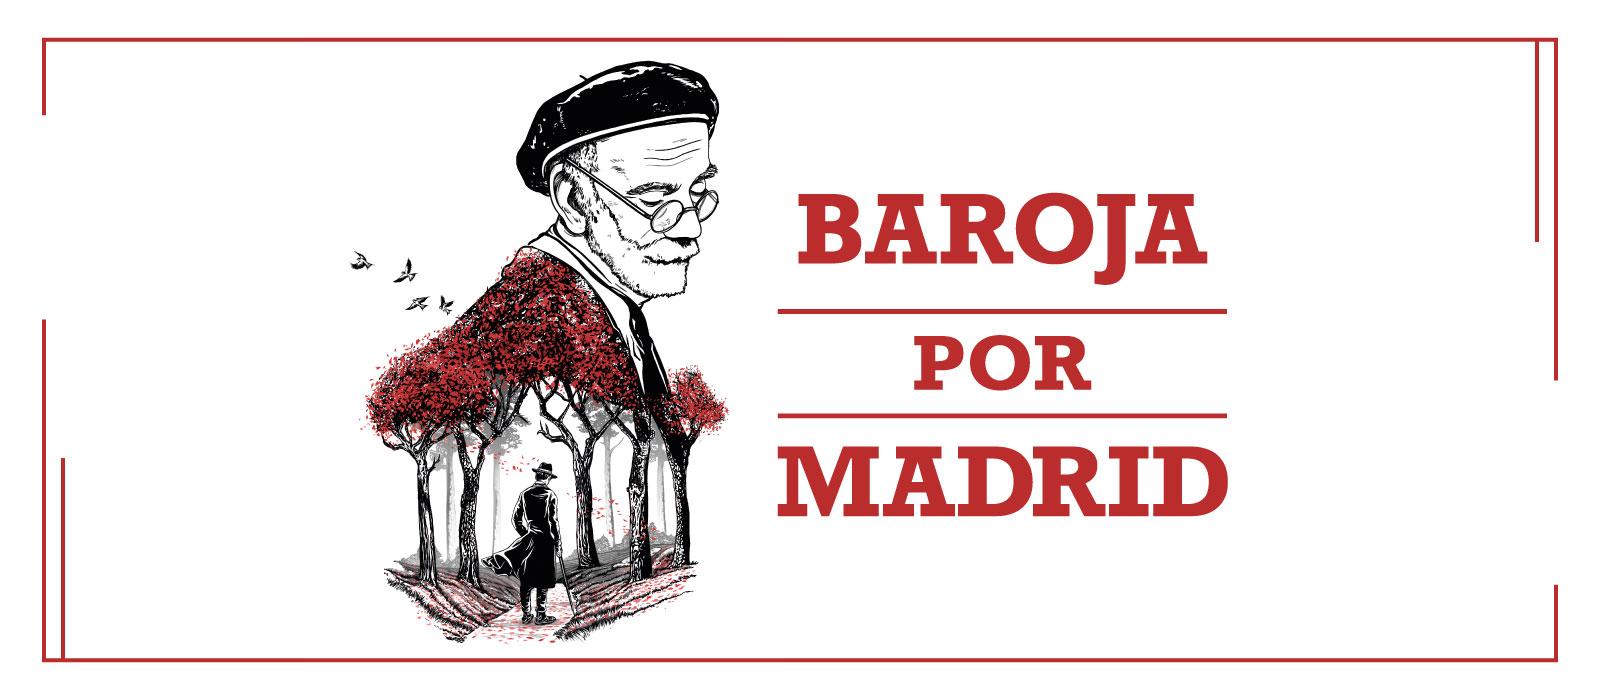 'Baroja por Madrid '